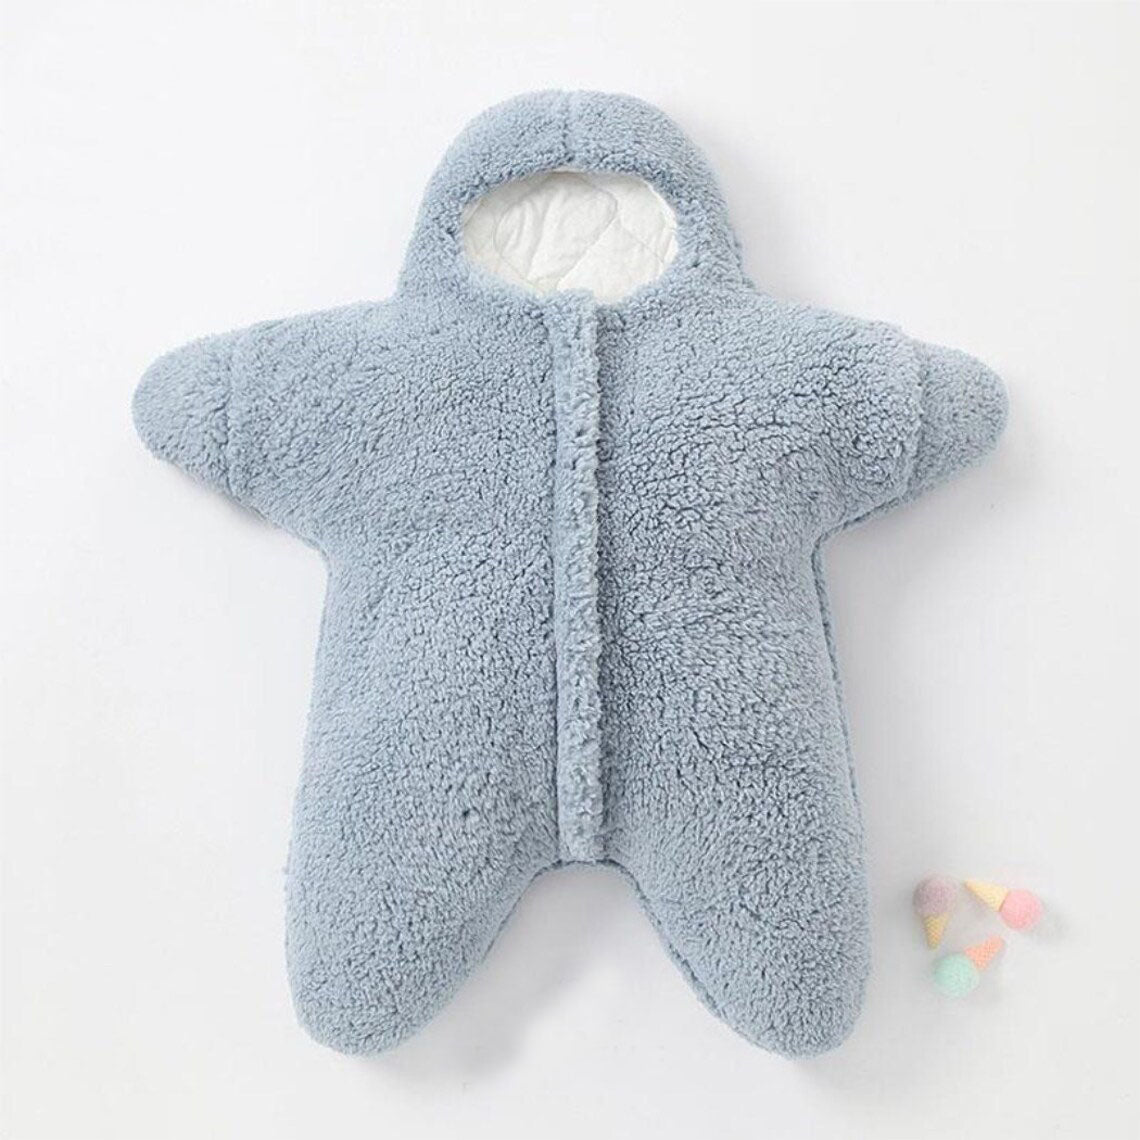 Starfish Pajamas Cute Baby Overall